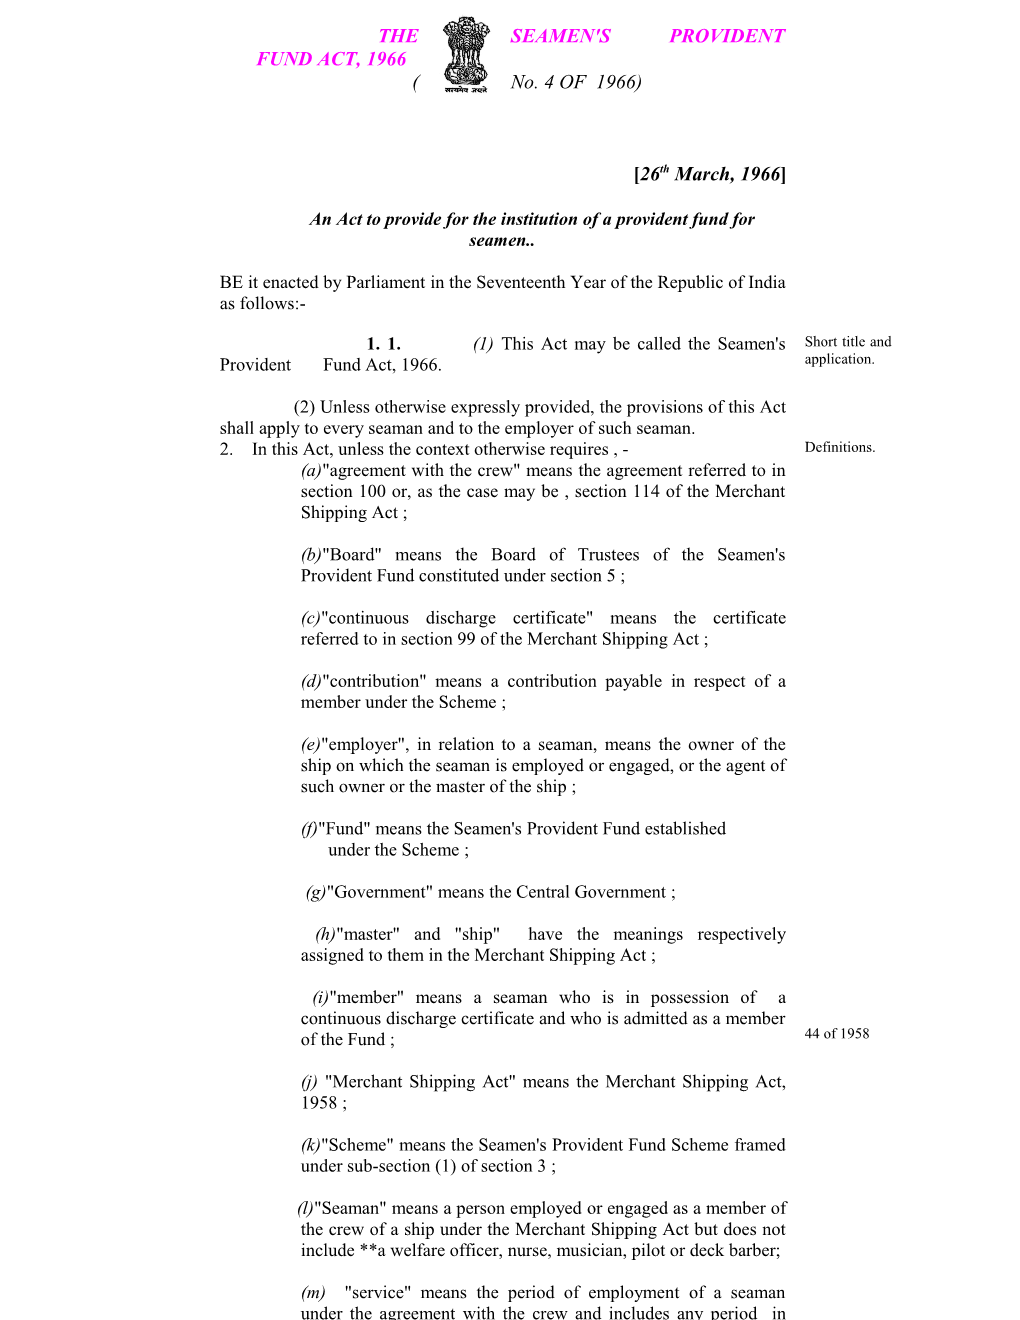 The Seamen's Provident Fund Act, 1966